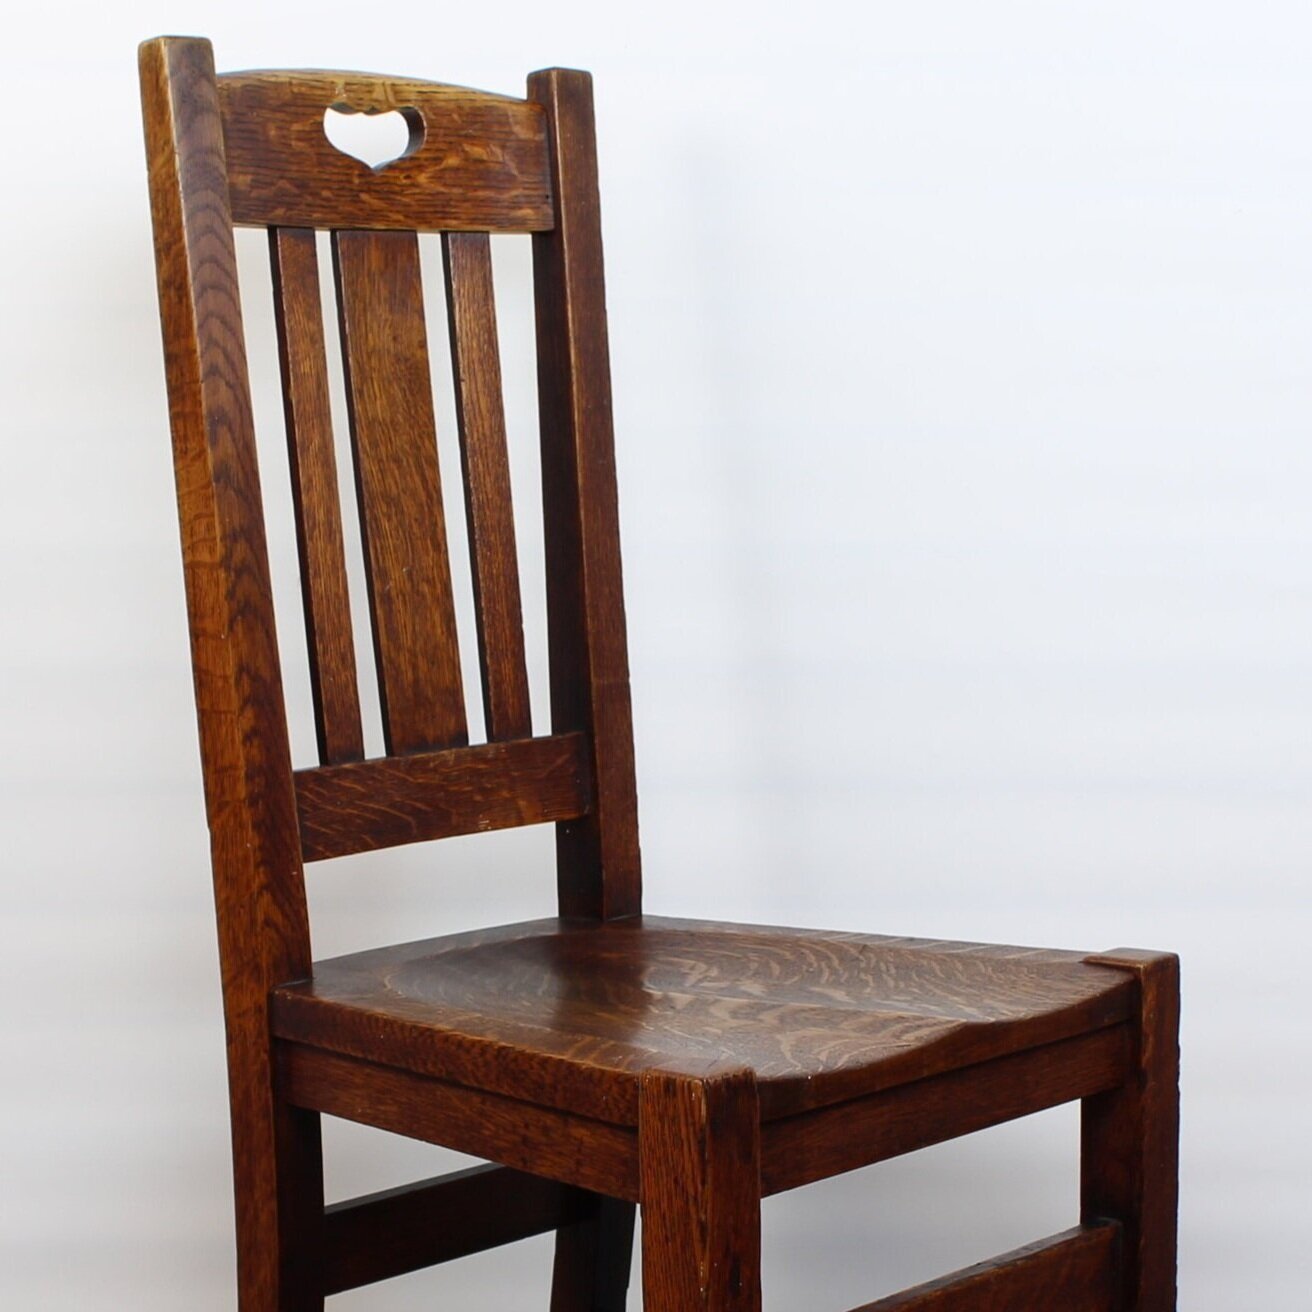 SOLD, Stickley Bros. Heart Cutout Chair